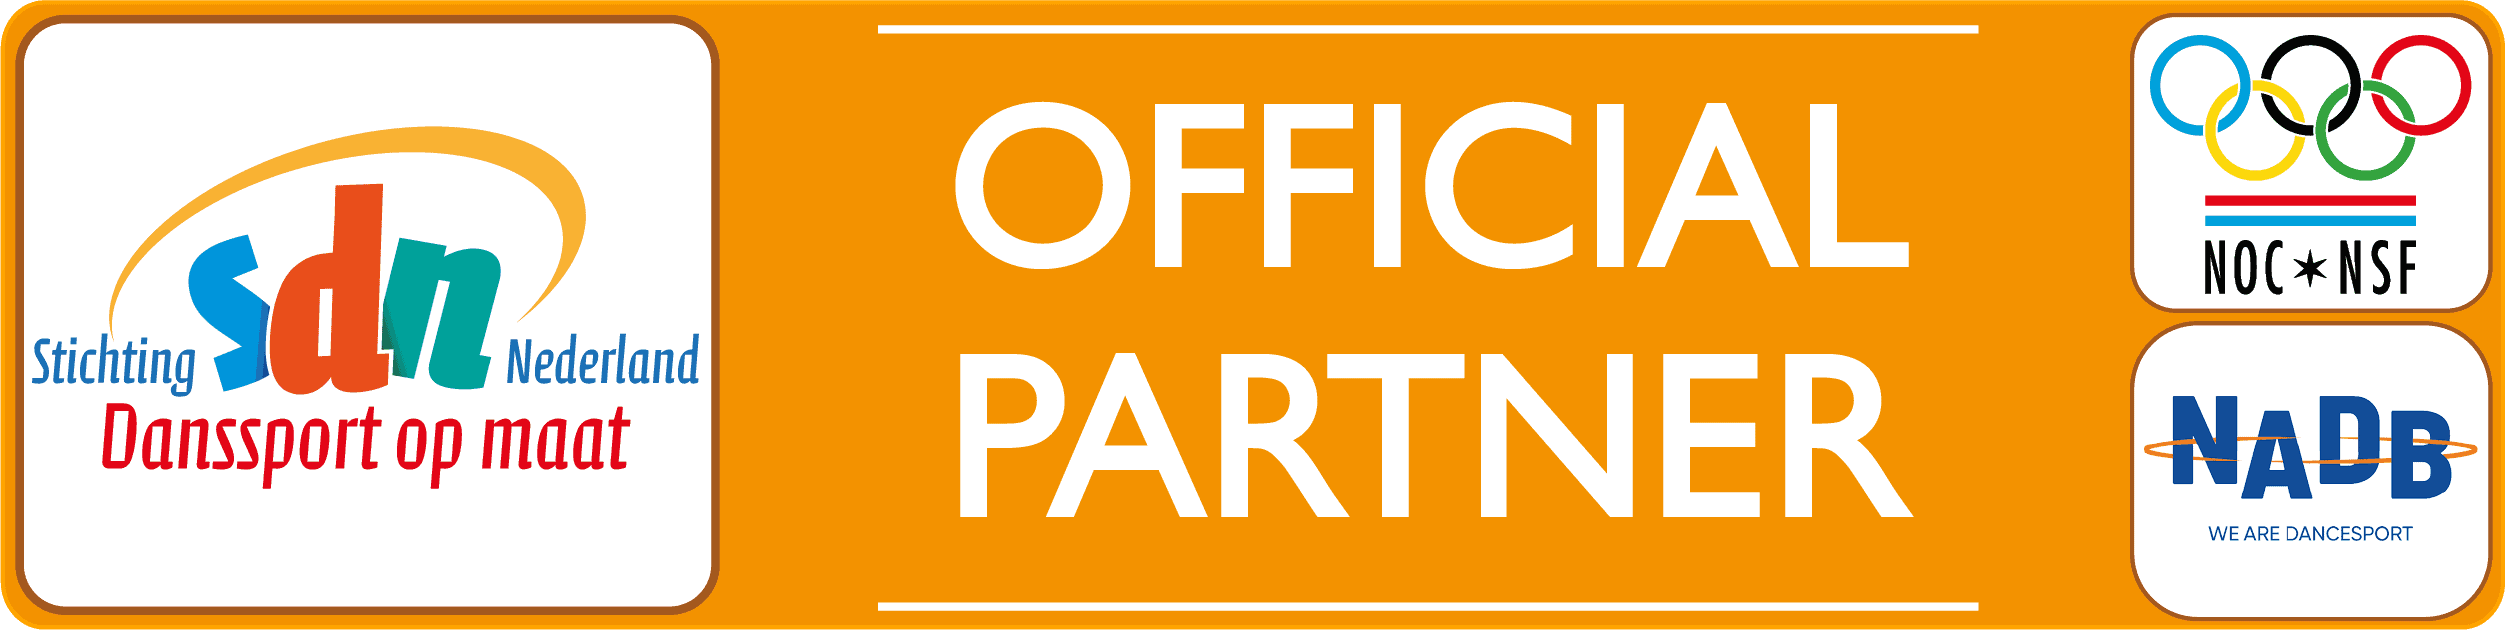 official-partner-logo-banner